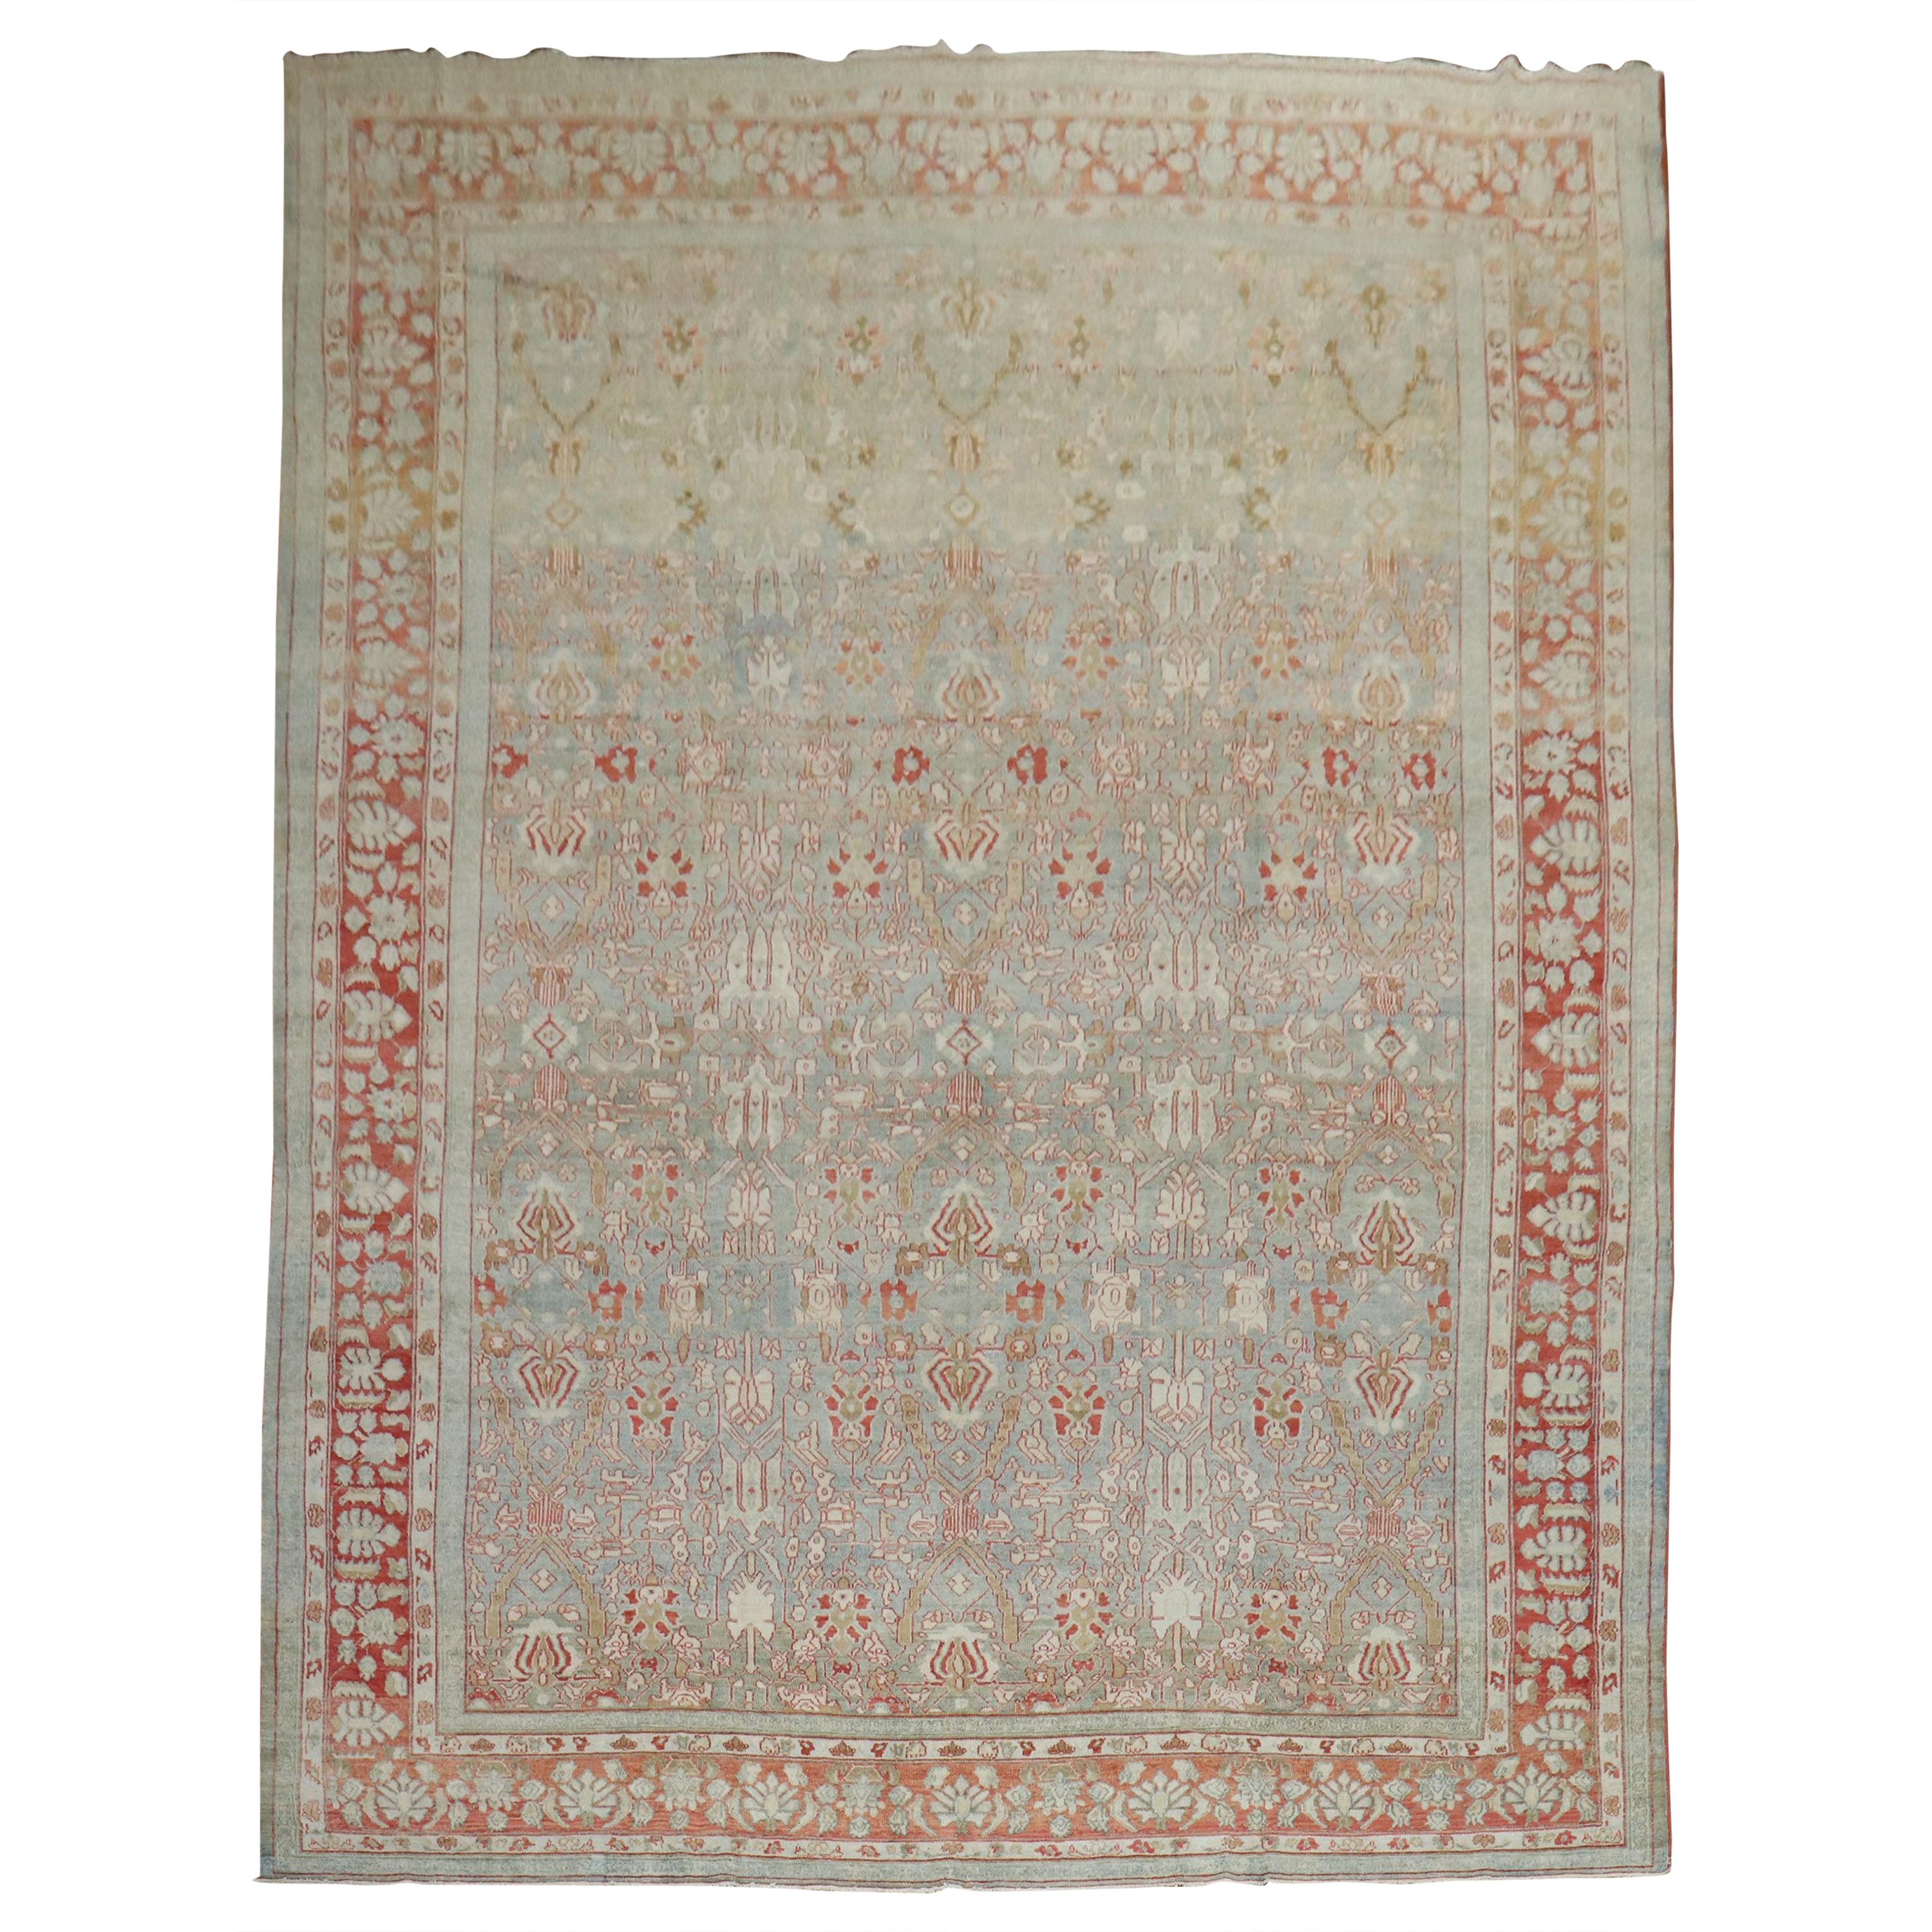 Decorative Oversize Gray Blue Persian Bibikabad Rug, Early 20th Century